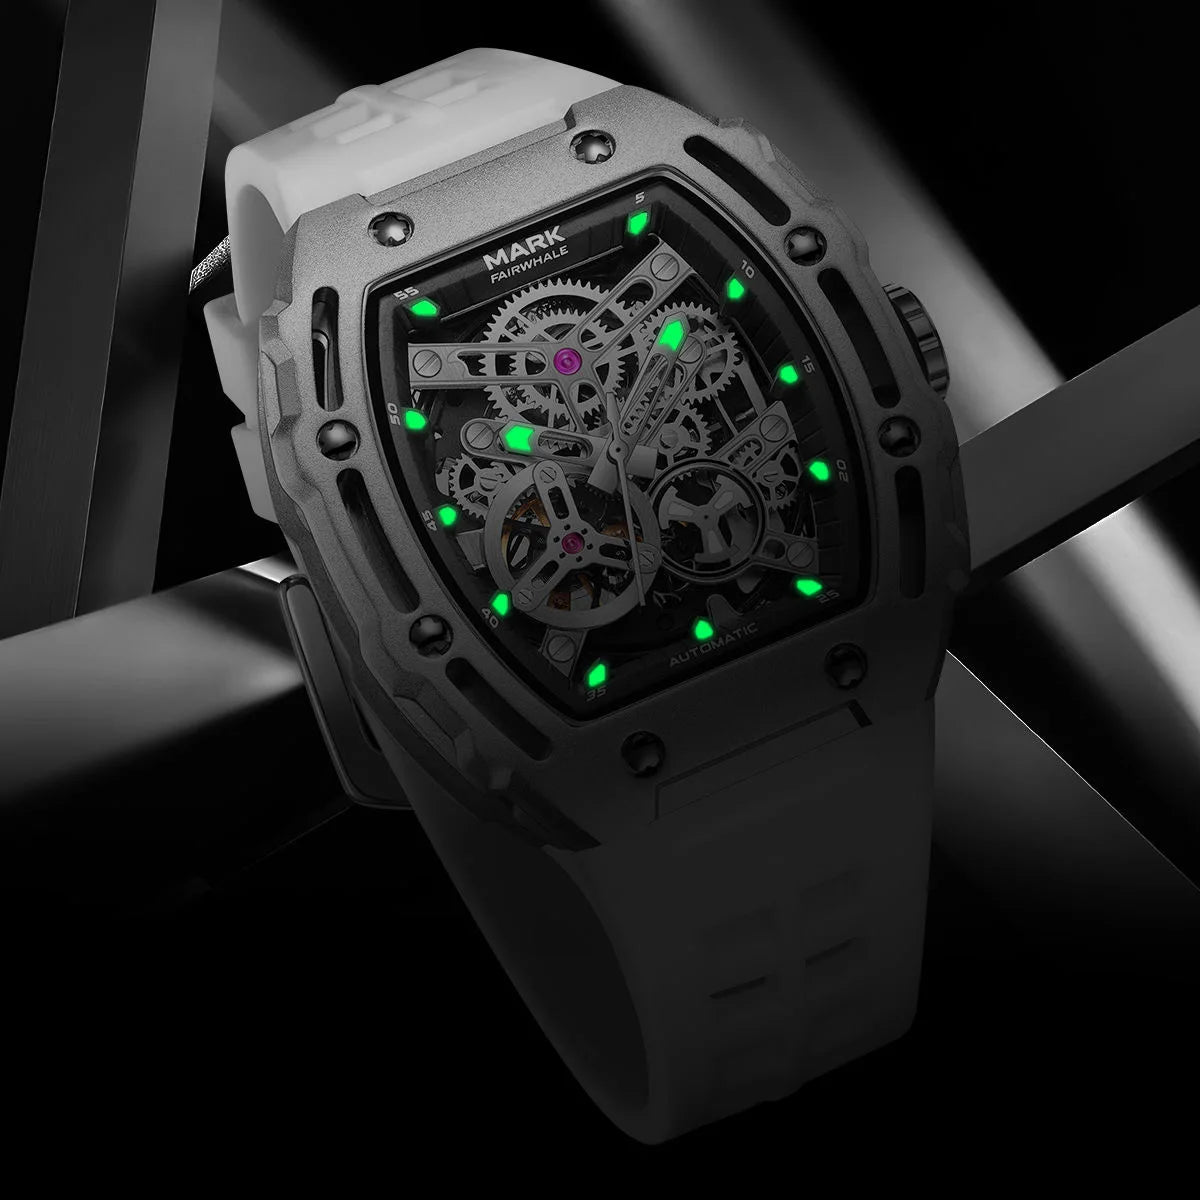 Luxury Fashion Men Original Automatic Watch Man Brand Mark Fairwhale Sports Tonneau Skeleton Mechanical Wrist Watches Reloj 2023